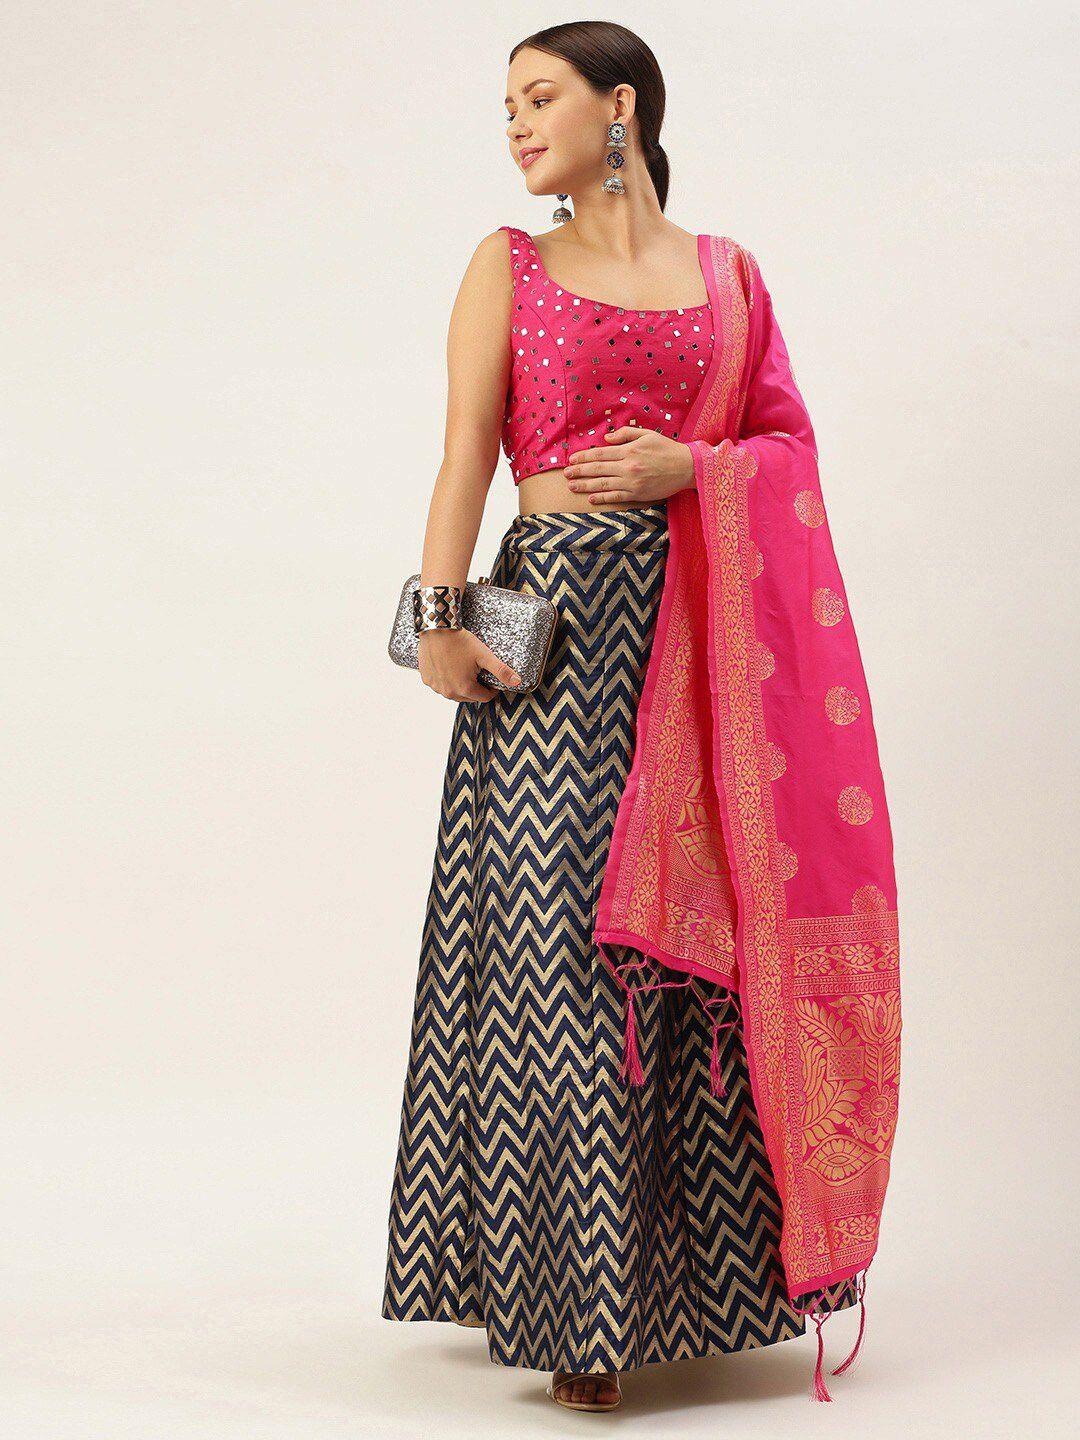 kaizen texo fab embellished semi-stitched lehenga & unstitched blouse with dupatta